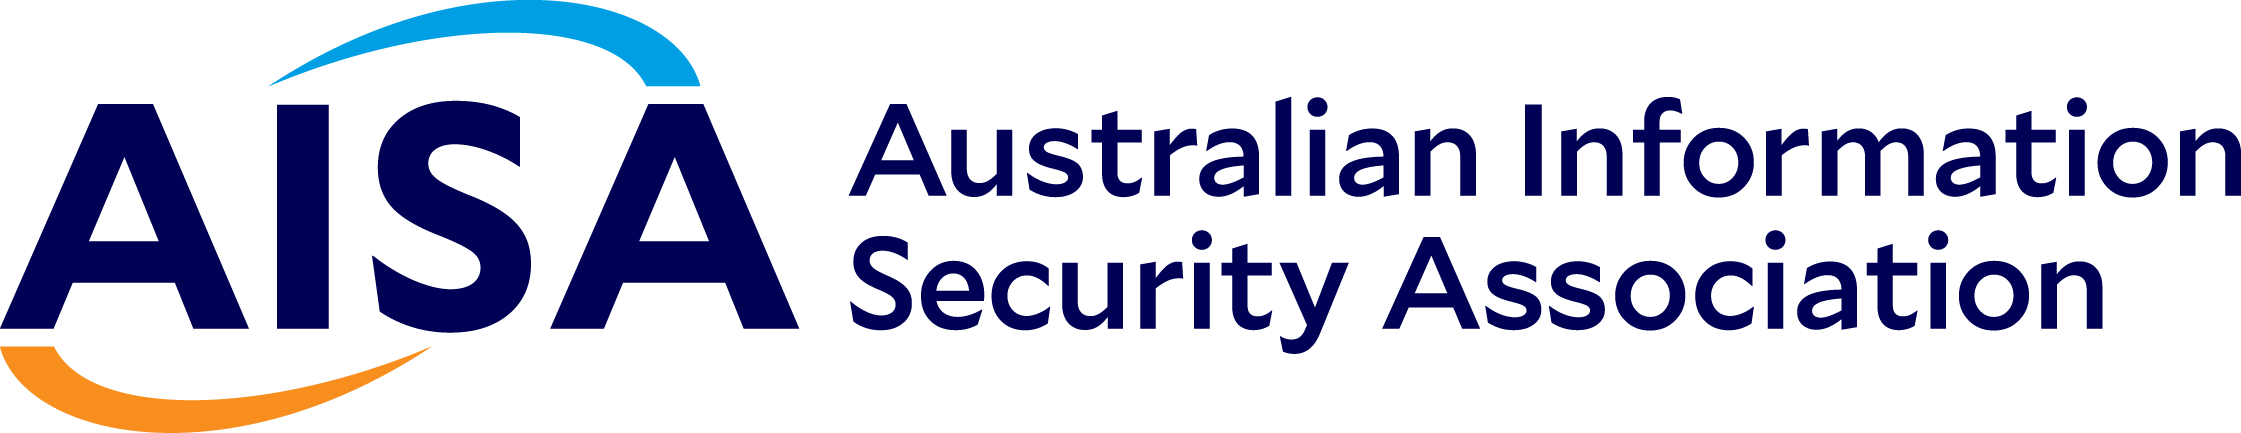 Logo AISA (Australian Information Security Association)